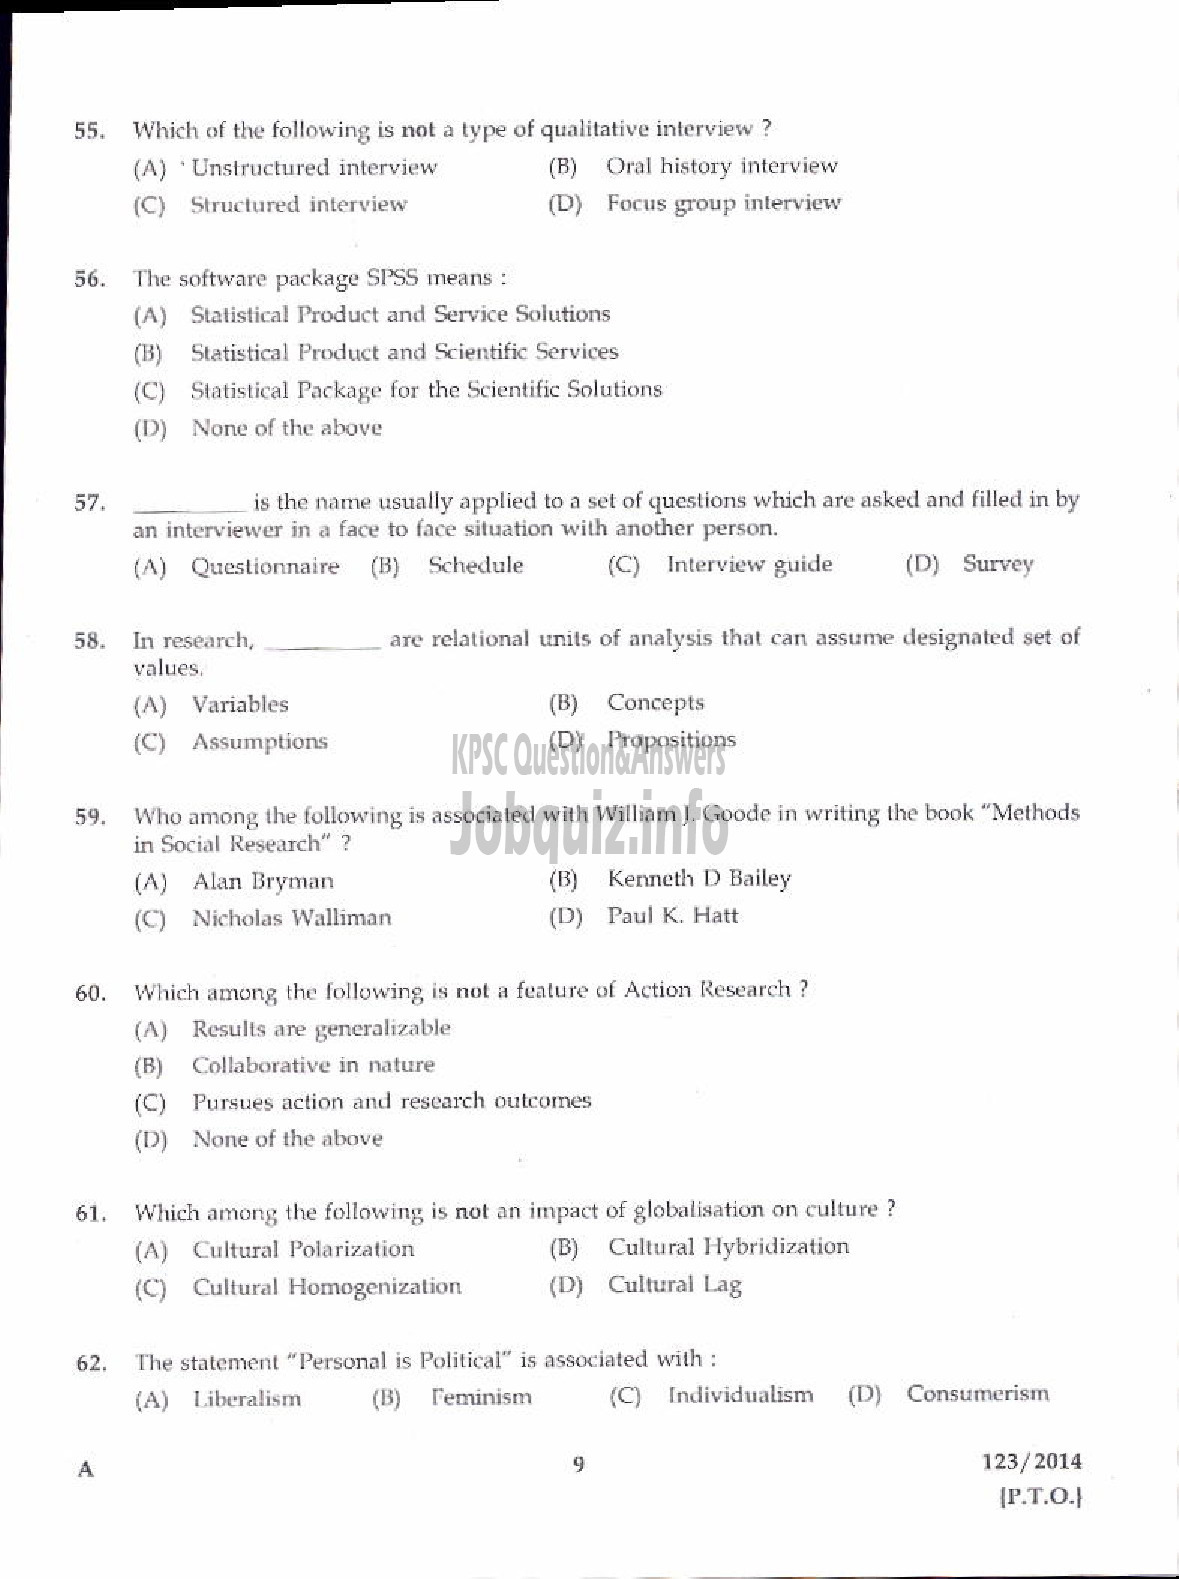 Kerala PSC Question Paper - LECTURER IN POLITICAL SCIENCE KERALA COLLEGIATE EDUCATION-7